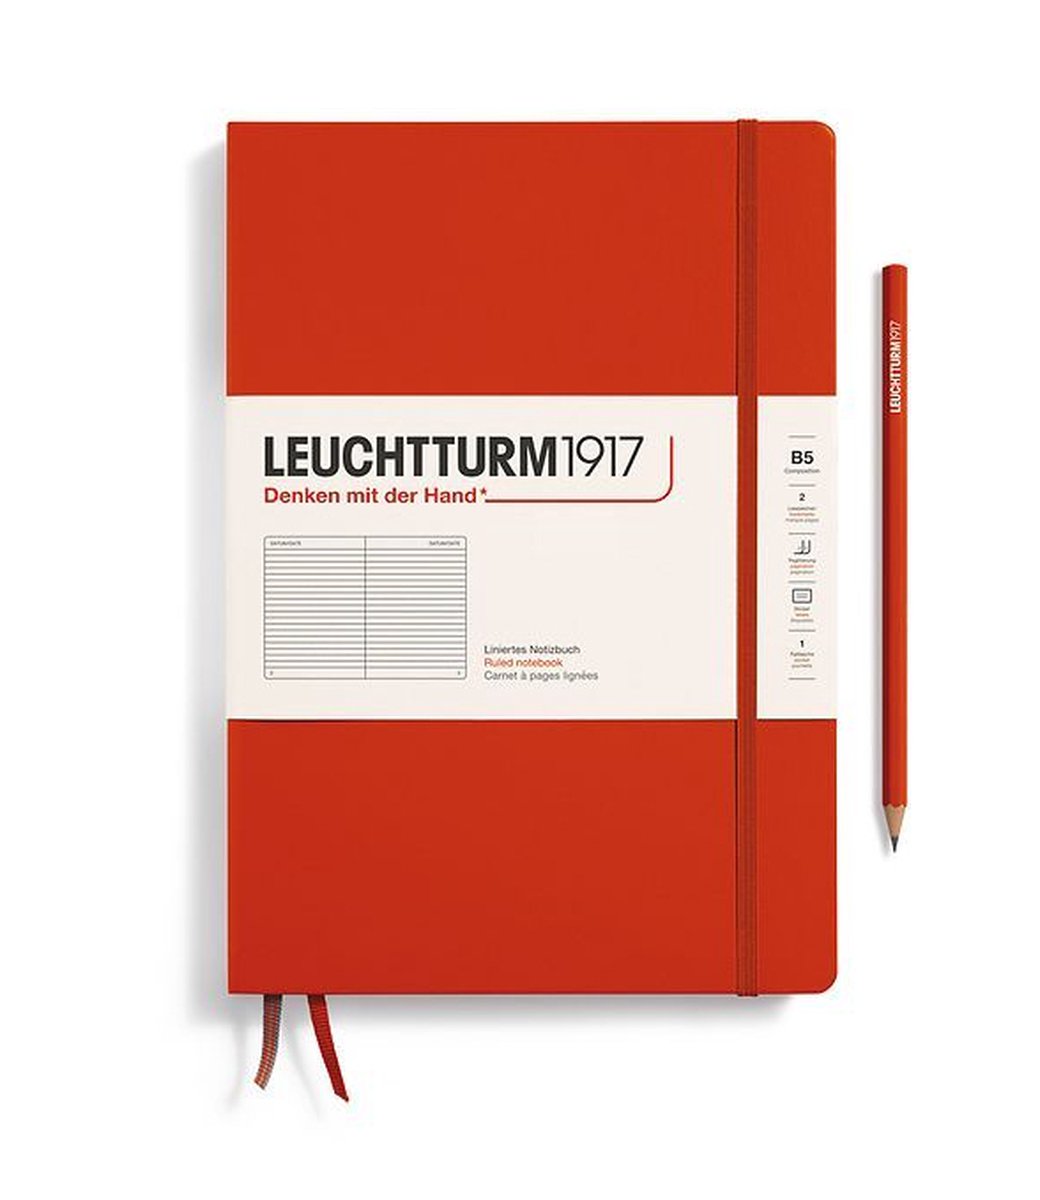 Leuchtturm notitieboek fox red lined composition hardcover b5 178x254mm